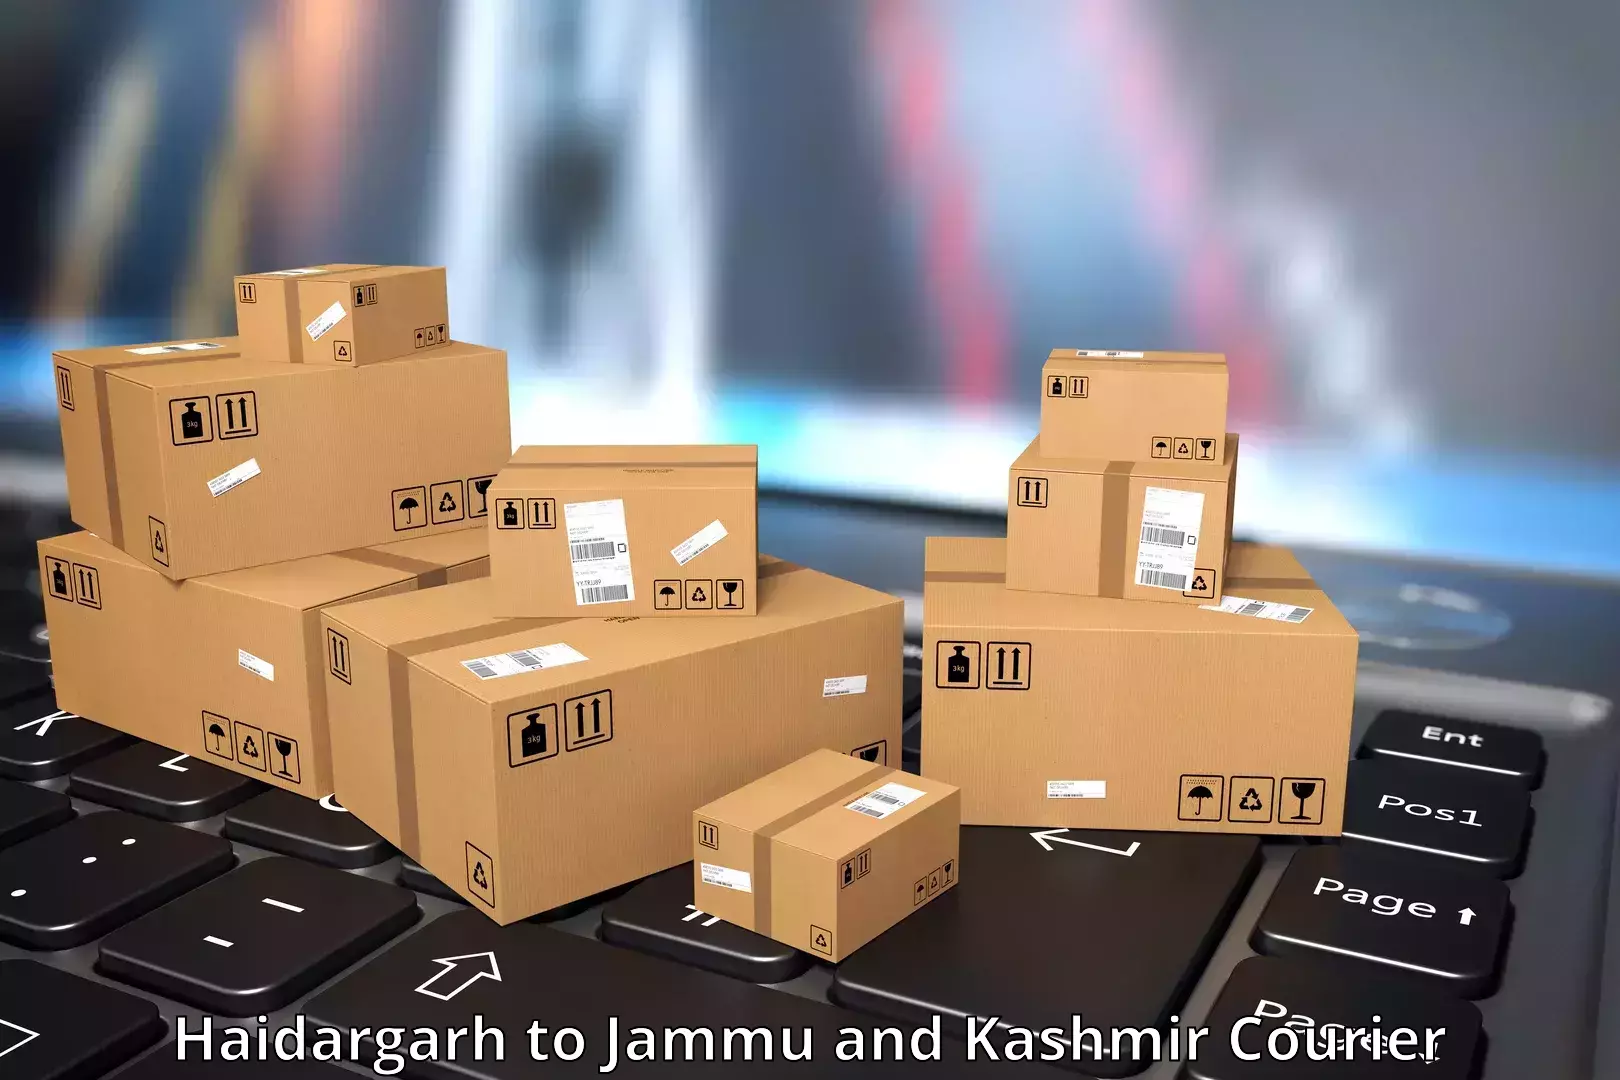 Advanced courier platforms Haidargarh to Bandipur